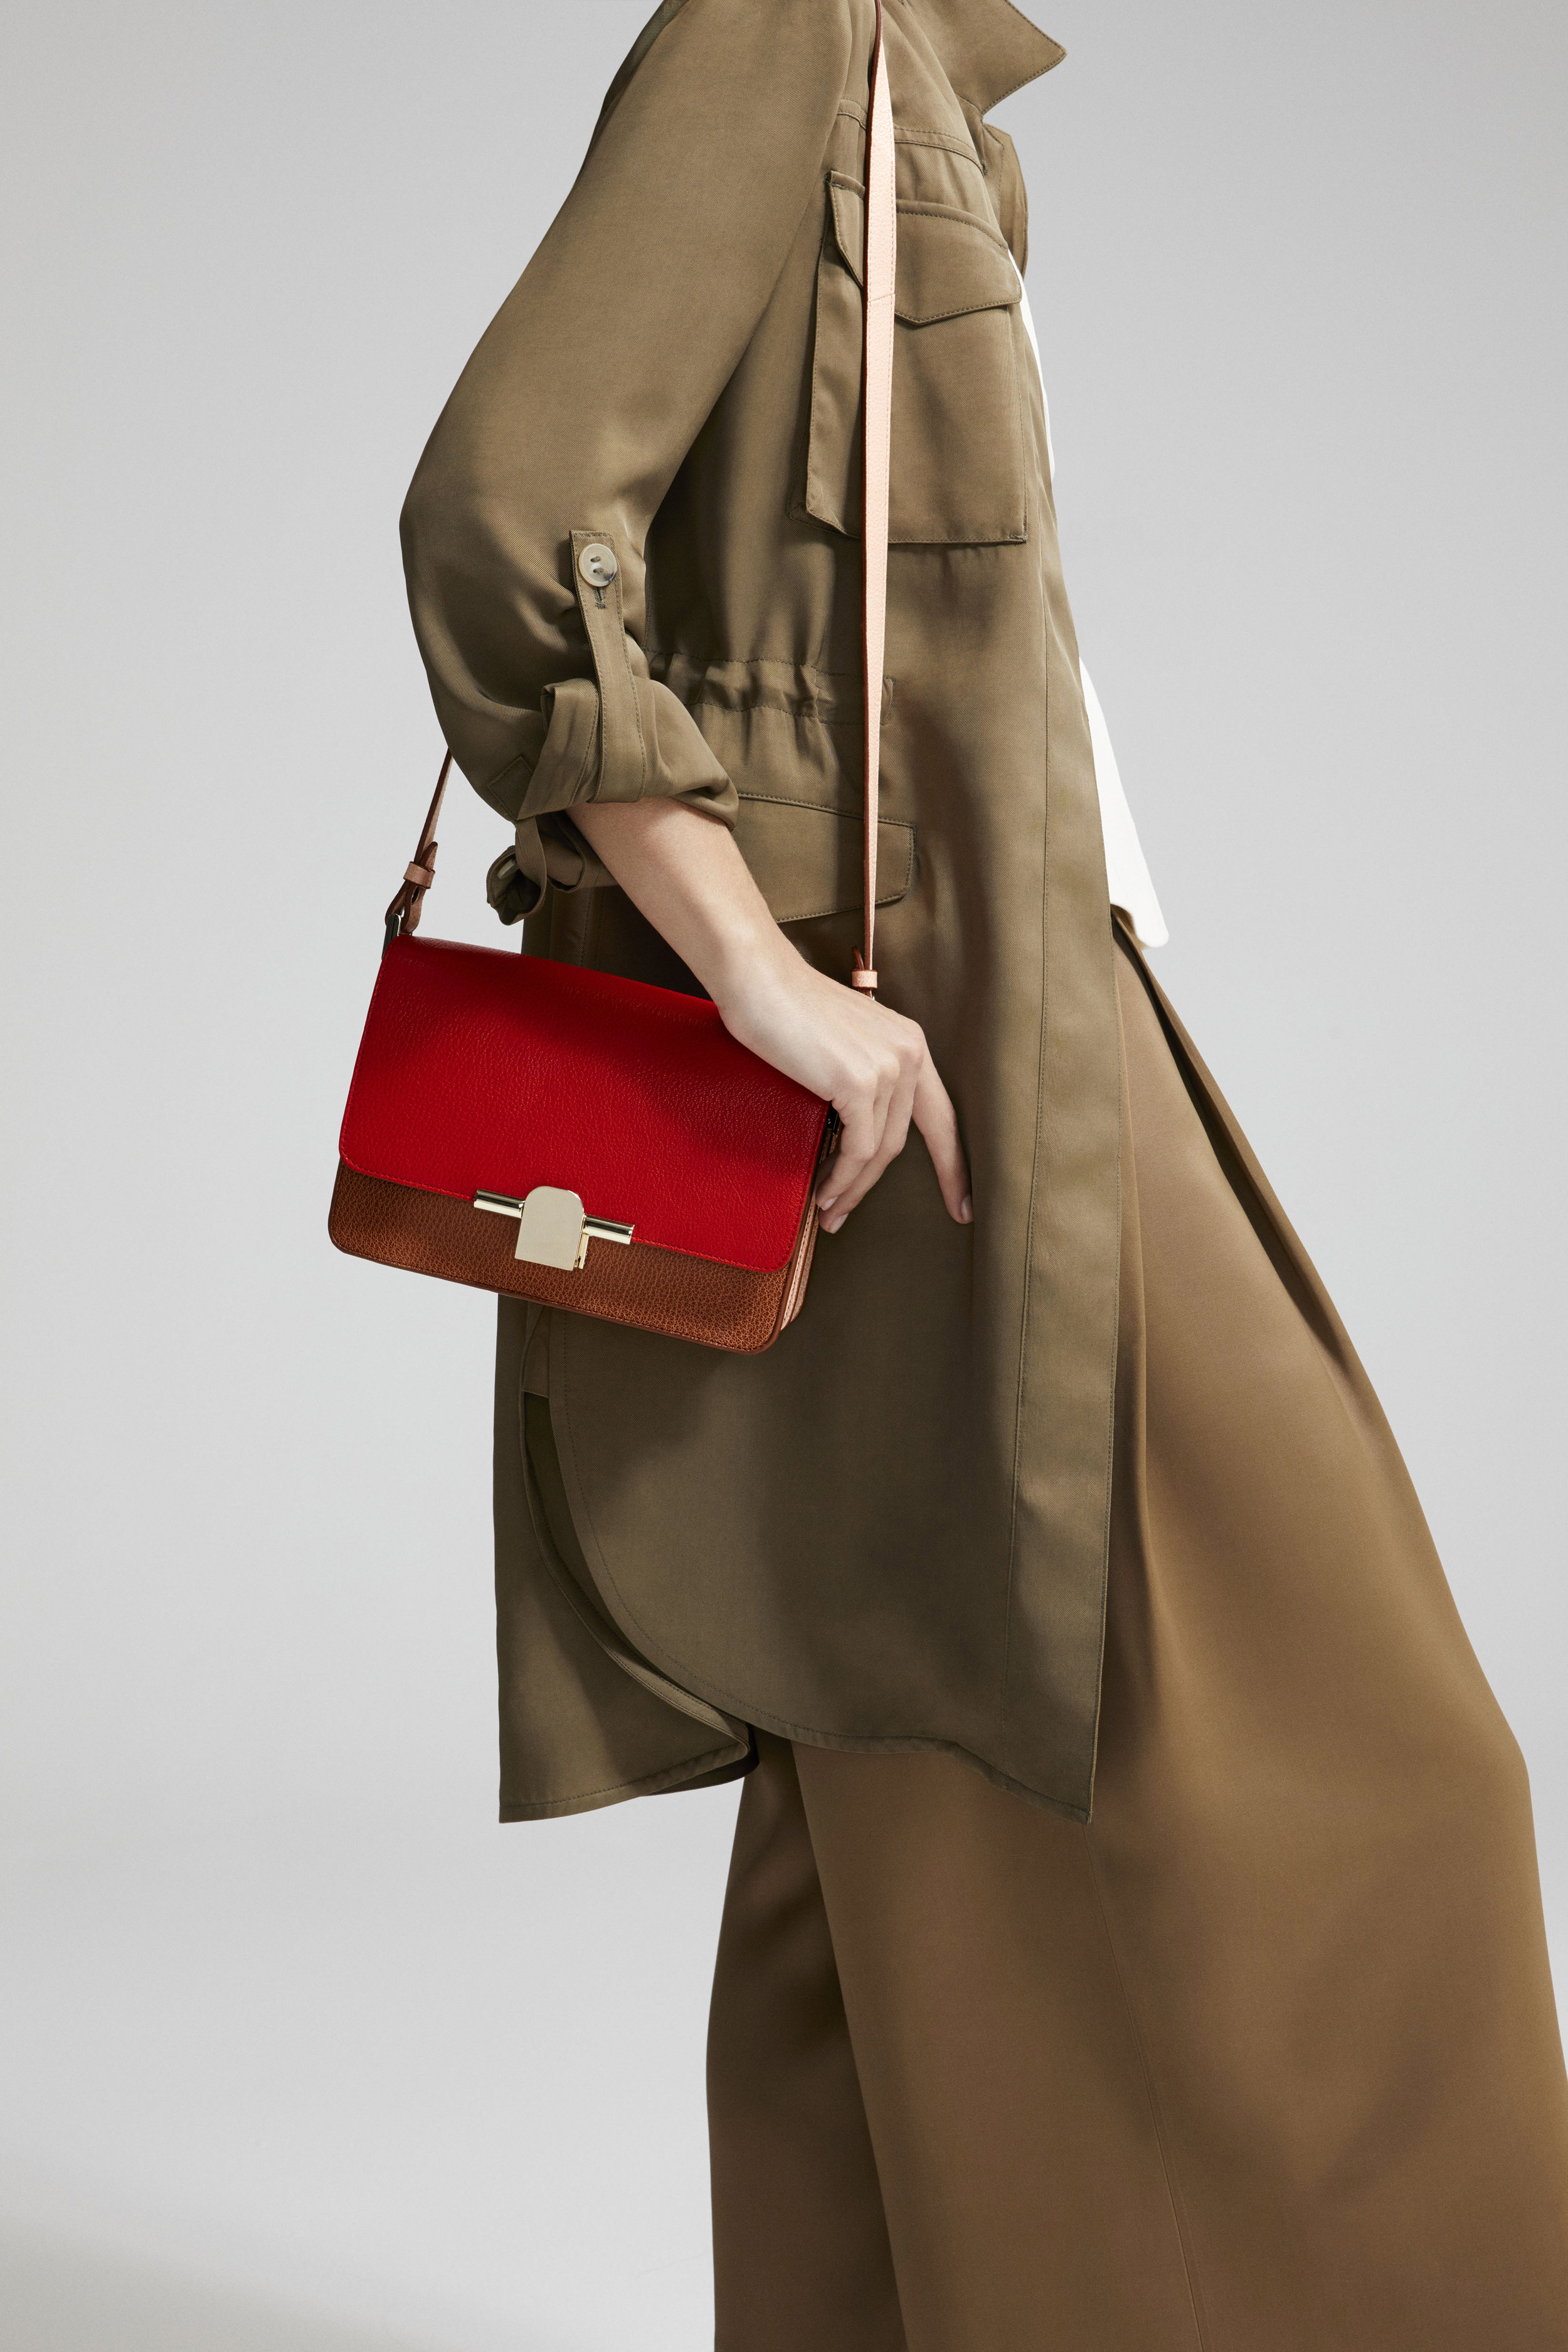 Massimo Dutti_The Iconic Bag (2).jpg